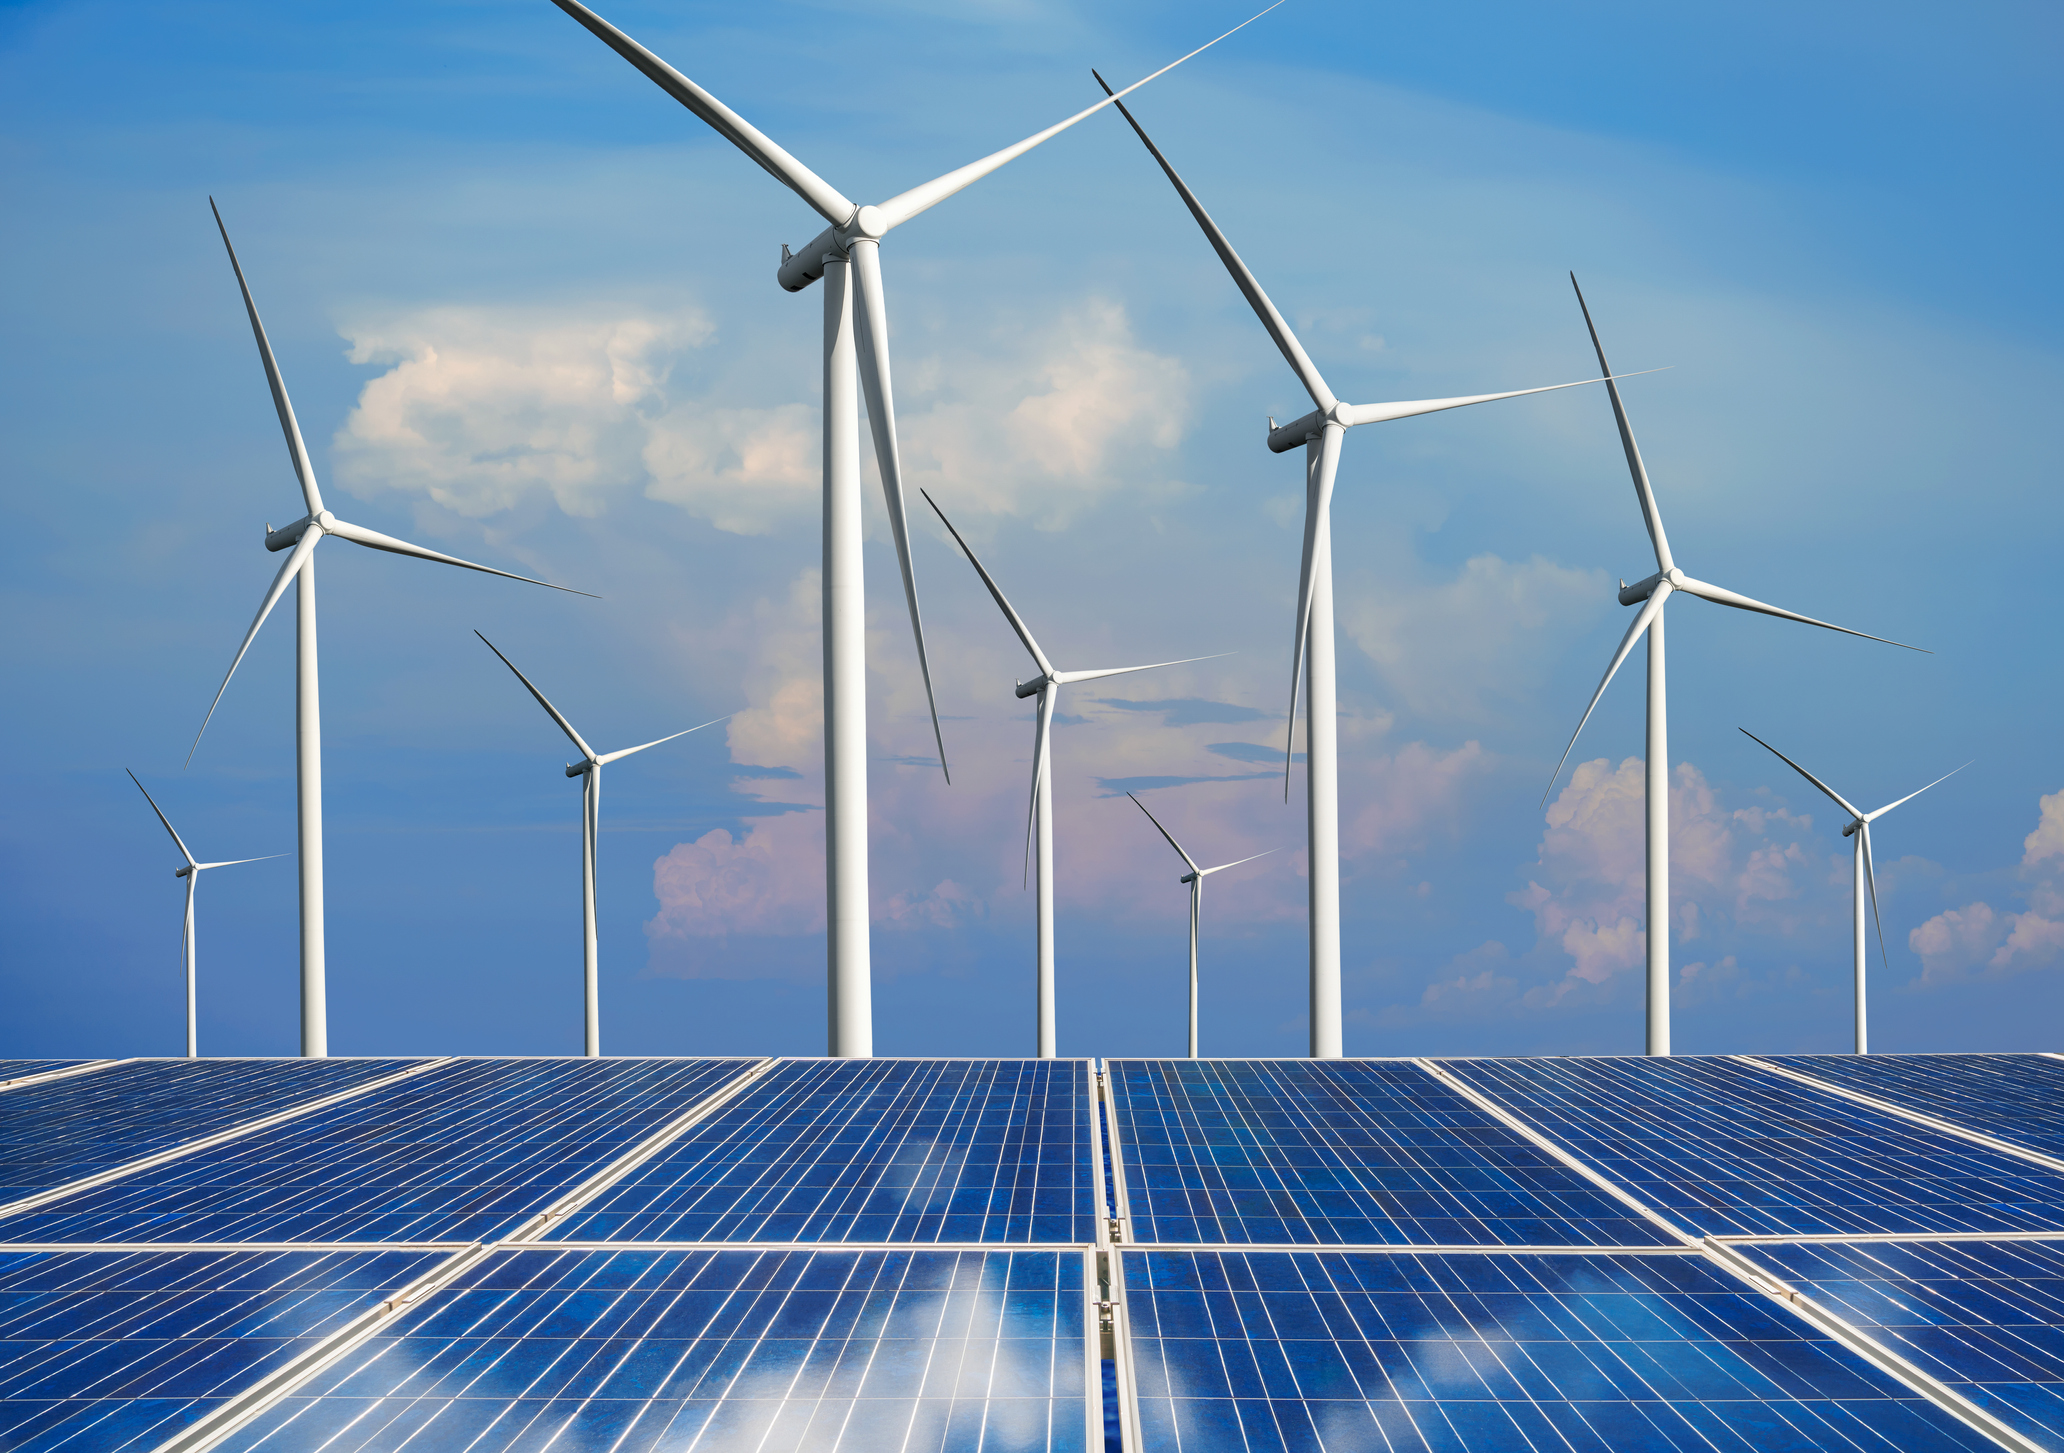 Research on renewable energy technologiesResearch on renewable energy technologies